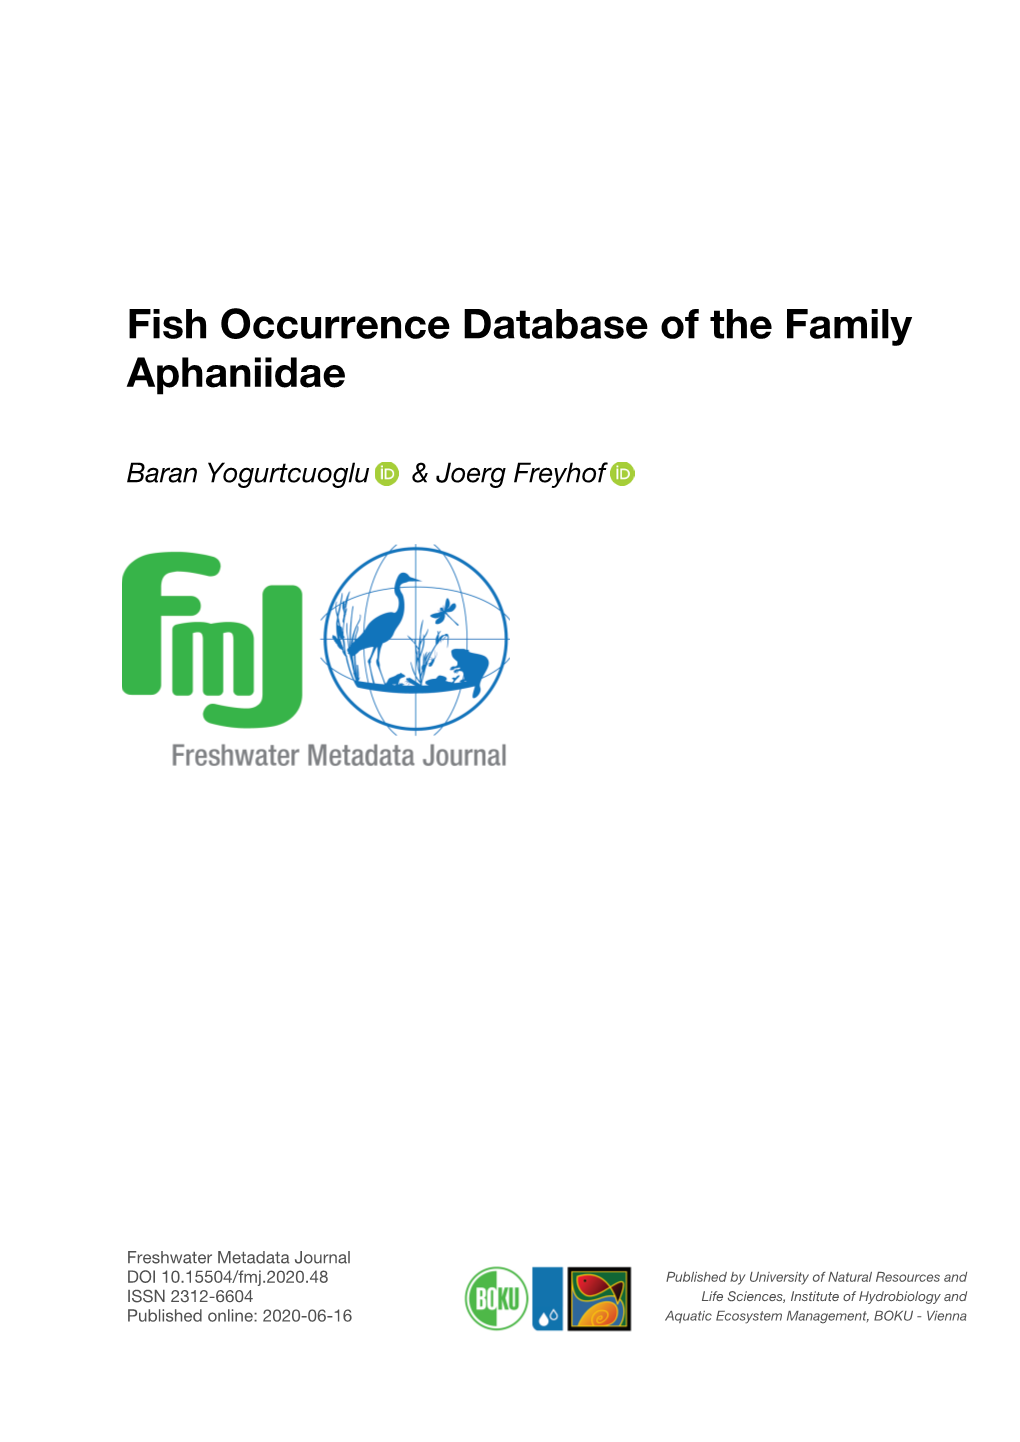 Fish Occurrence Database of the Family Aphaniidae